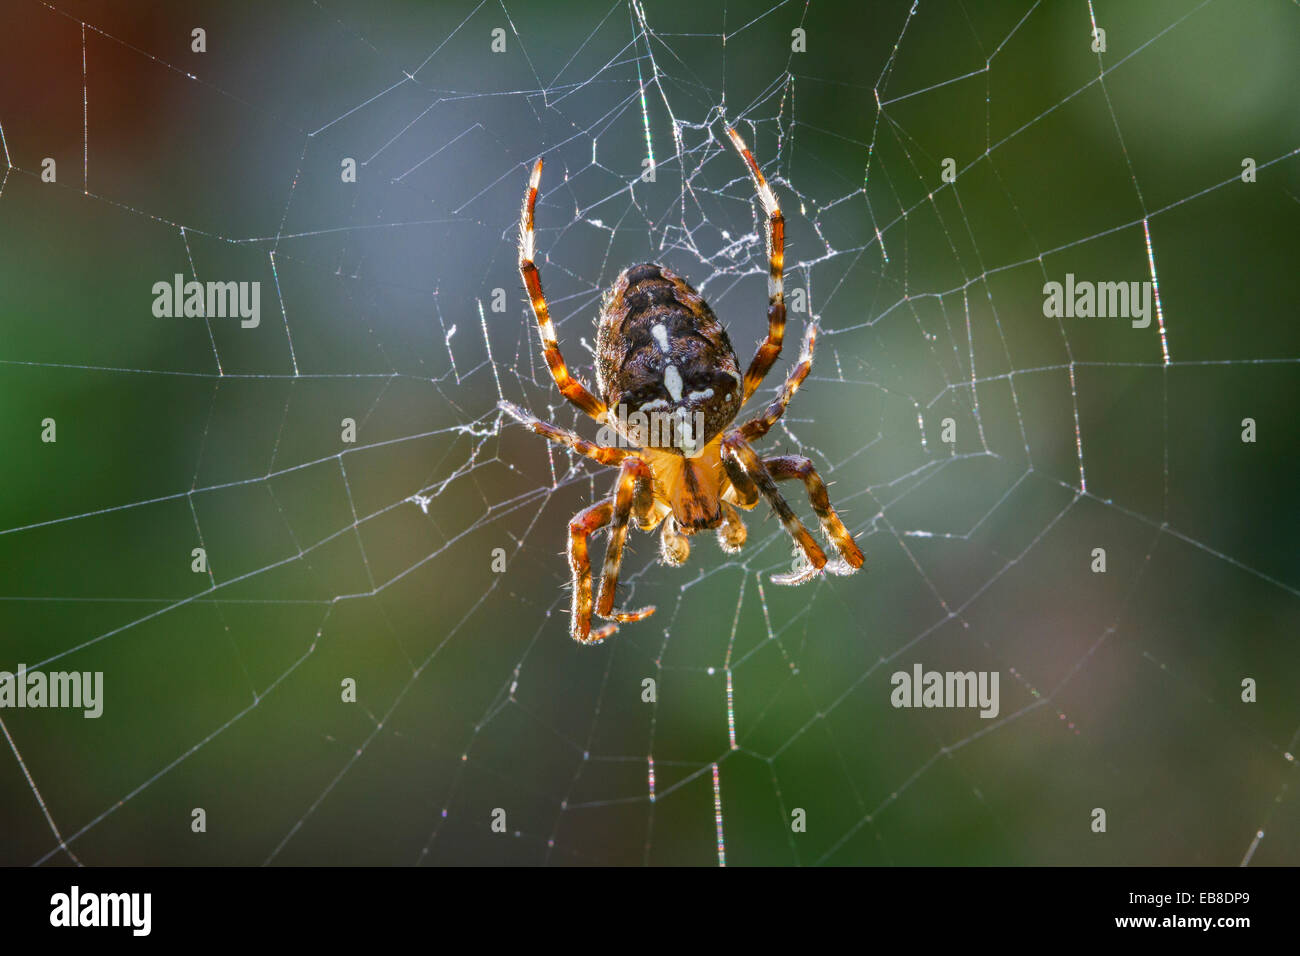 European garden spider / diadem spider / cross spider / cross orbweaver (Araneus diadematus) in web Stock Photo